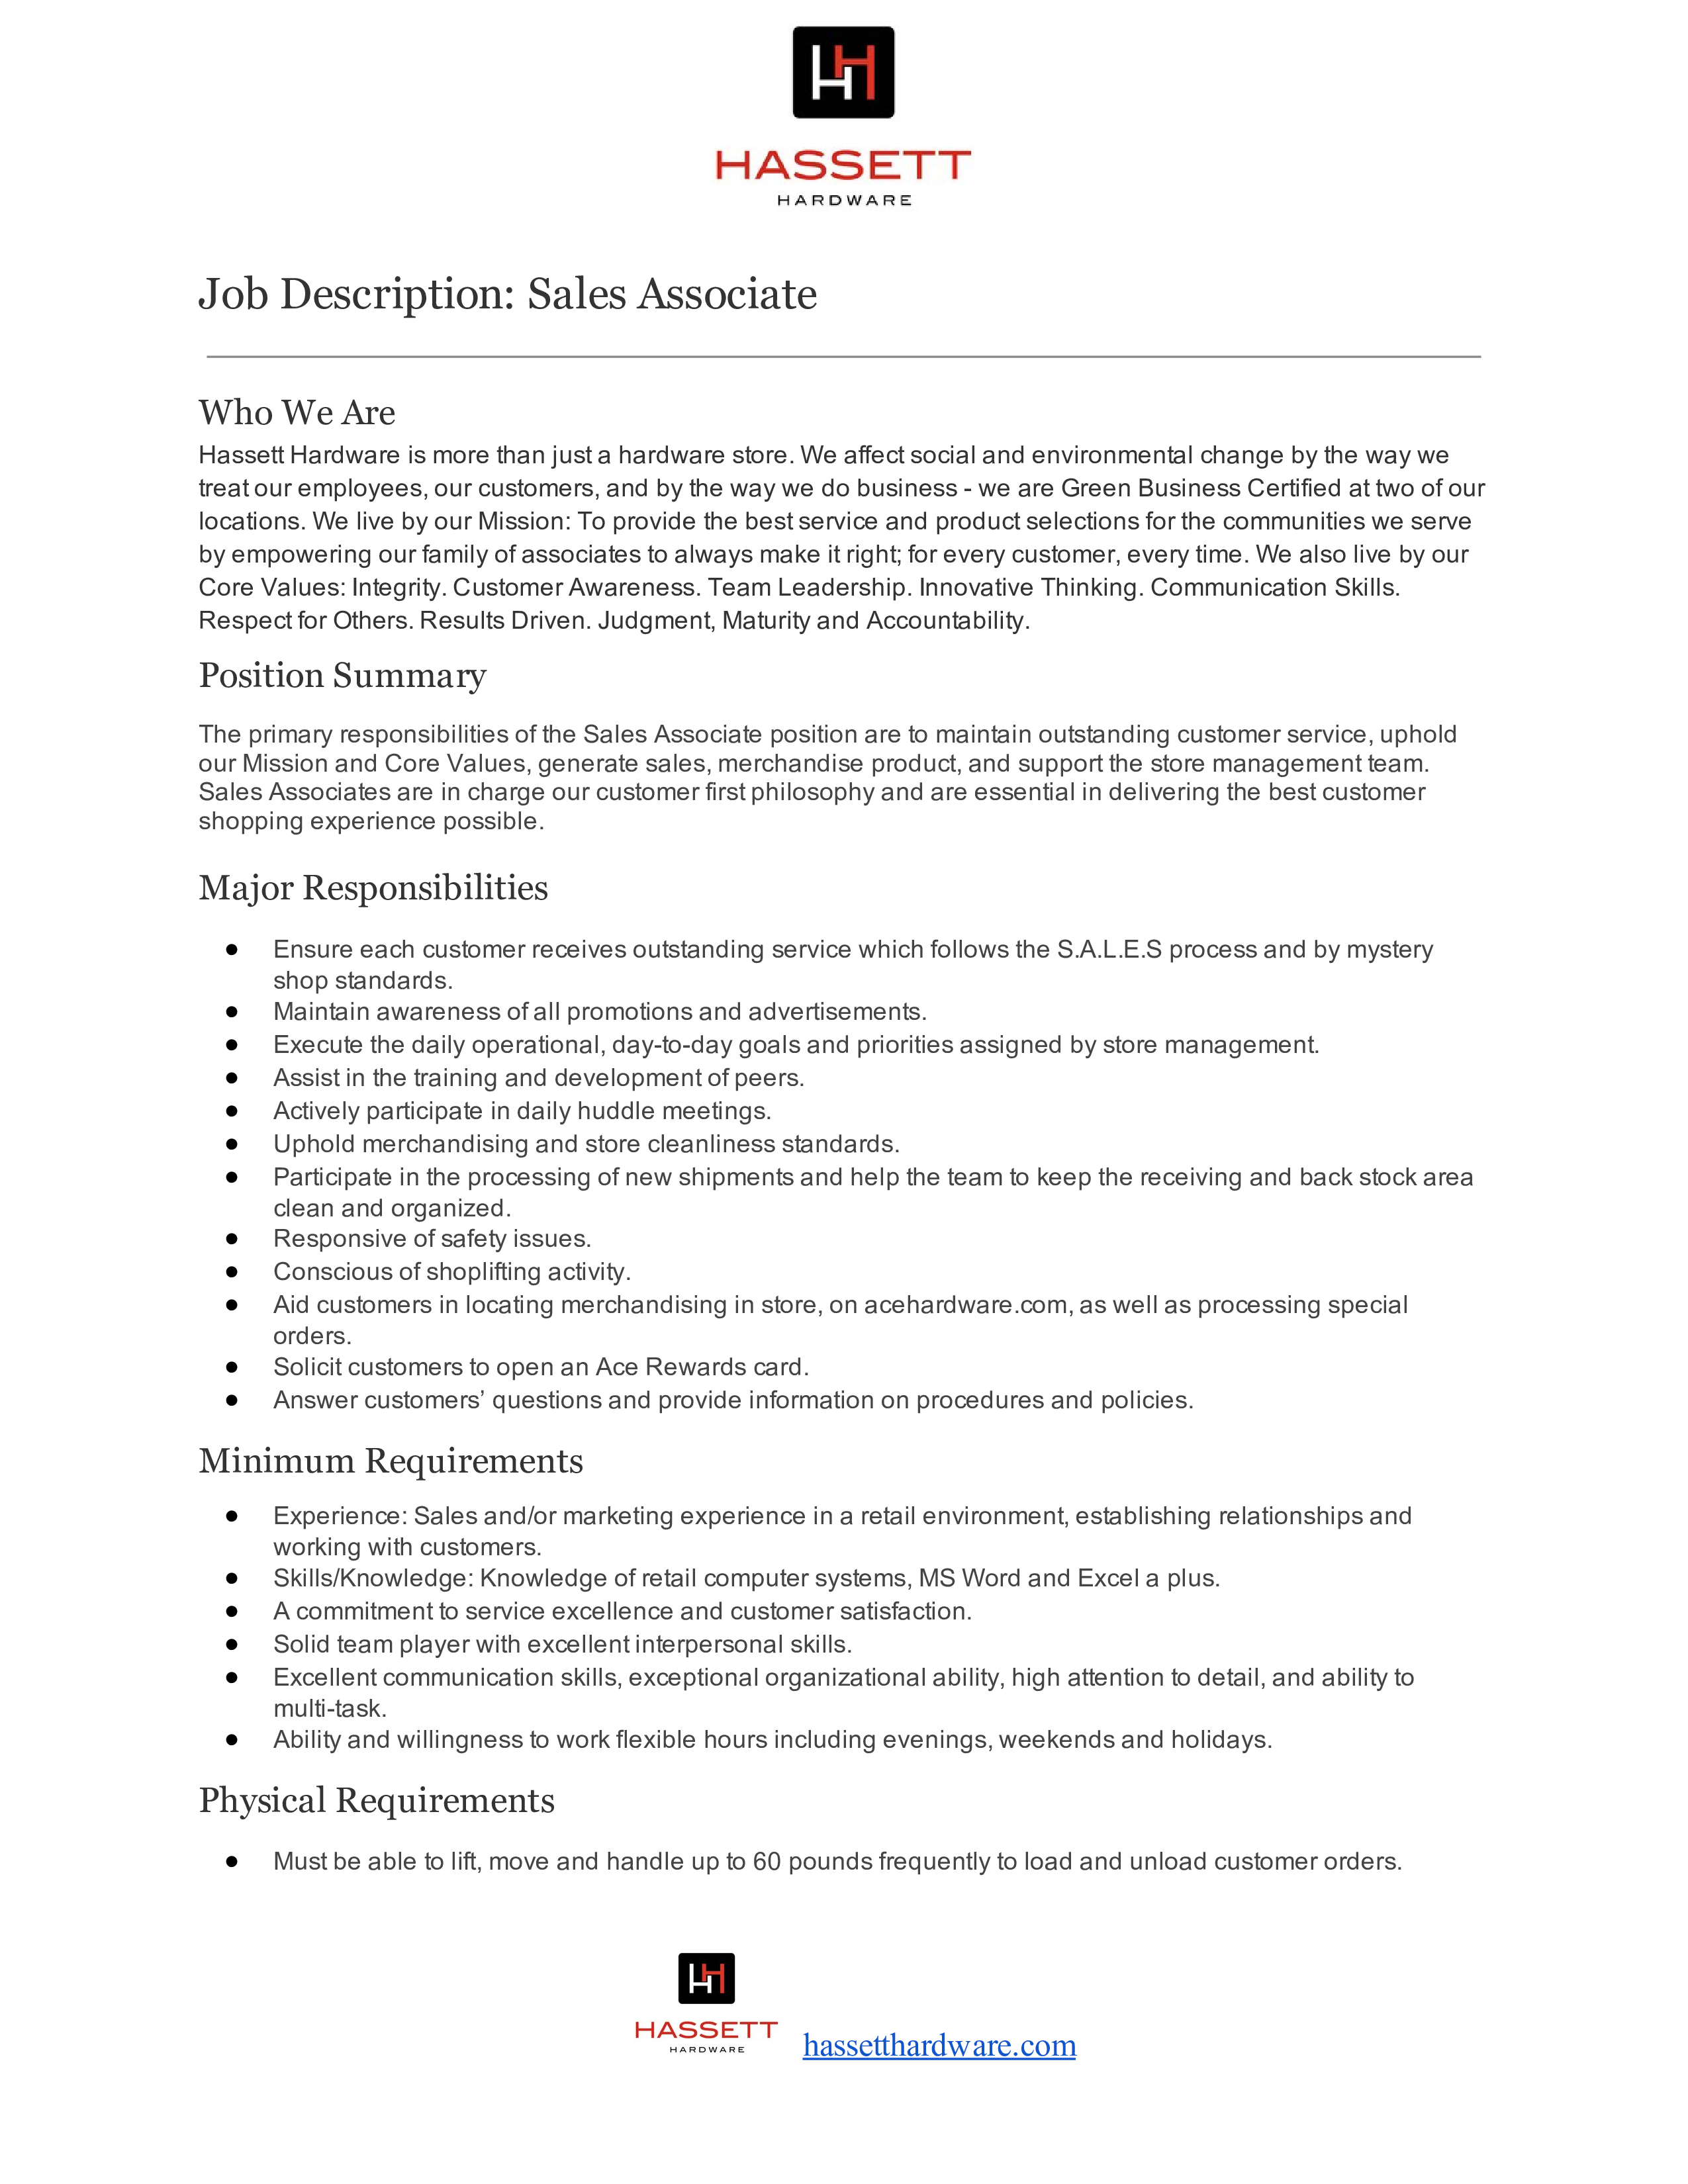 sales associate job description template